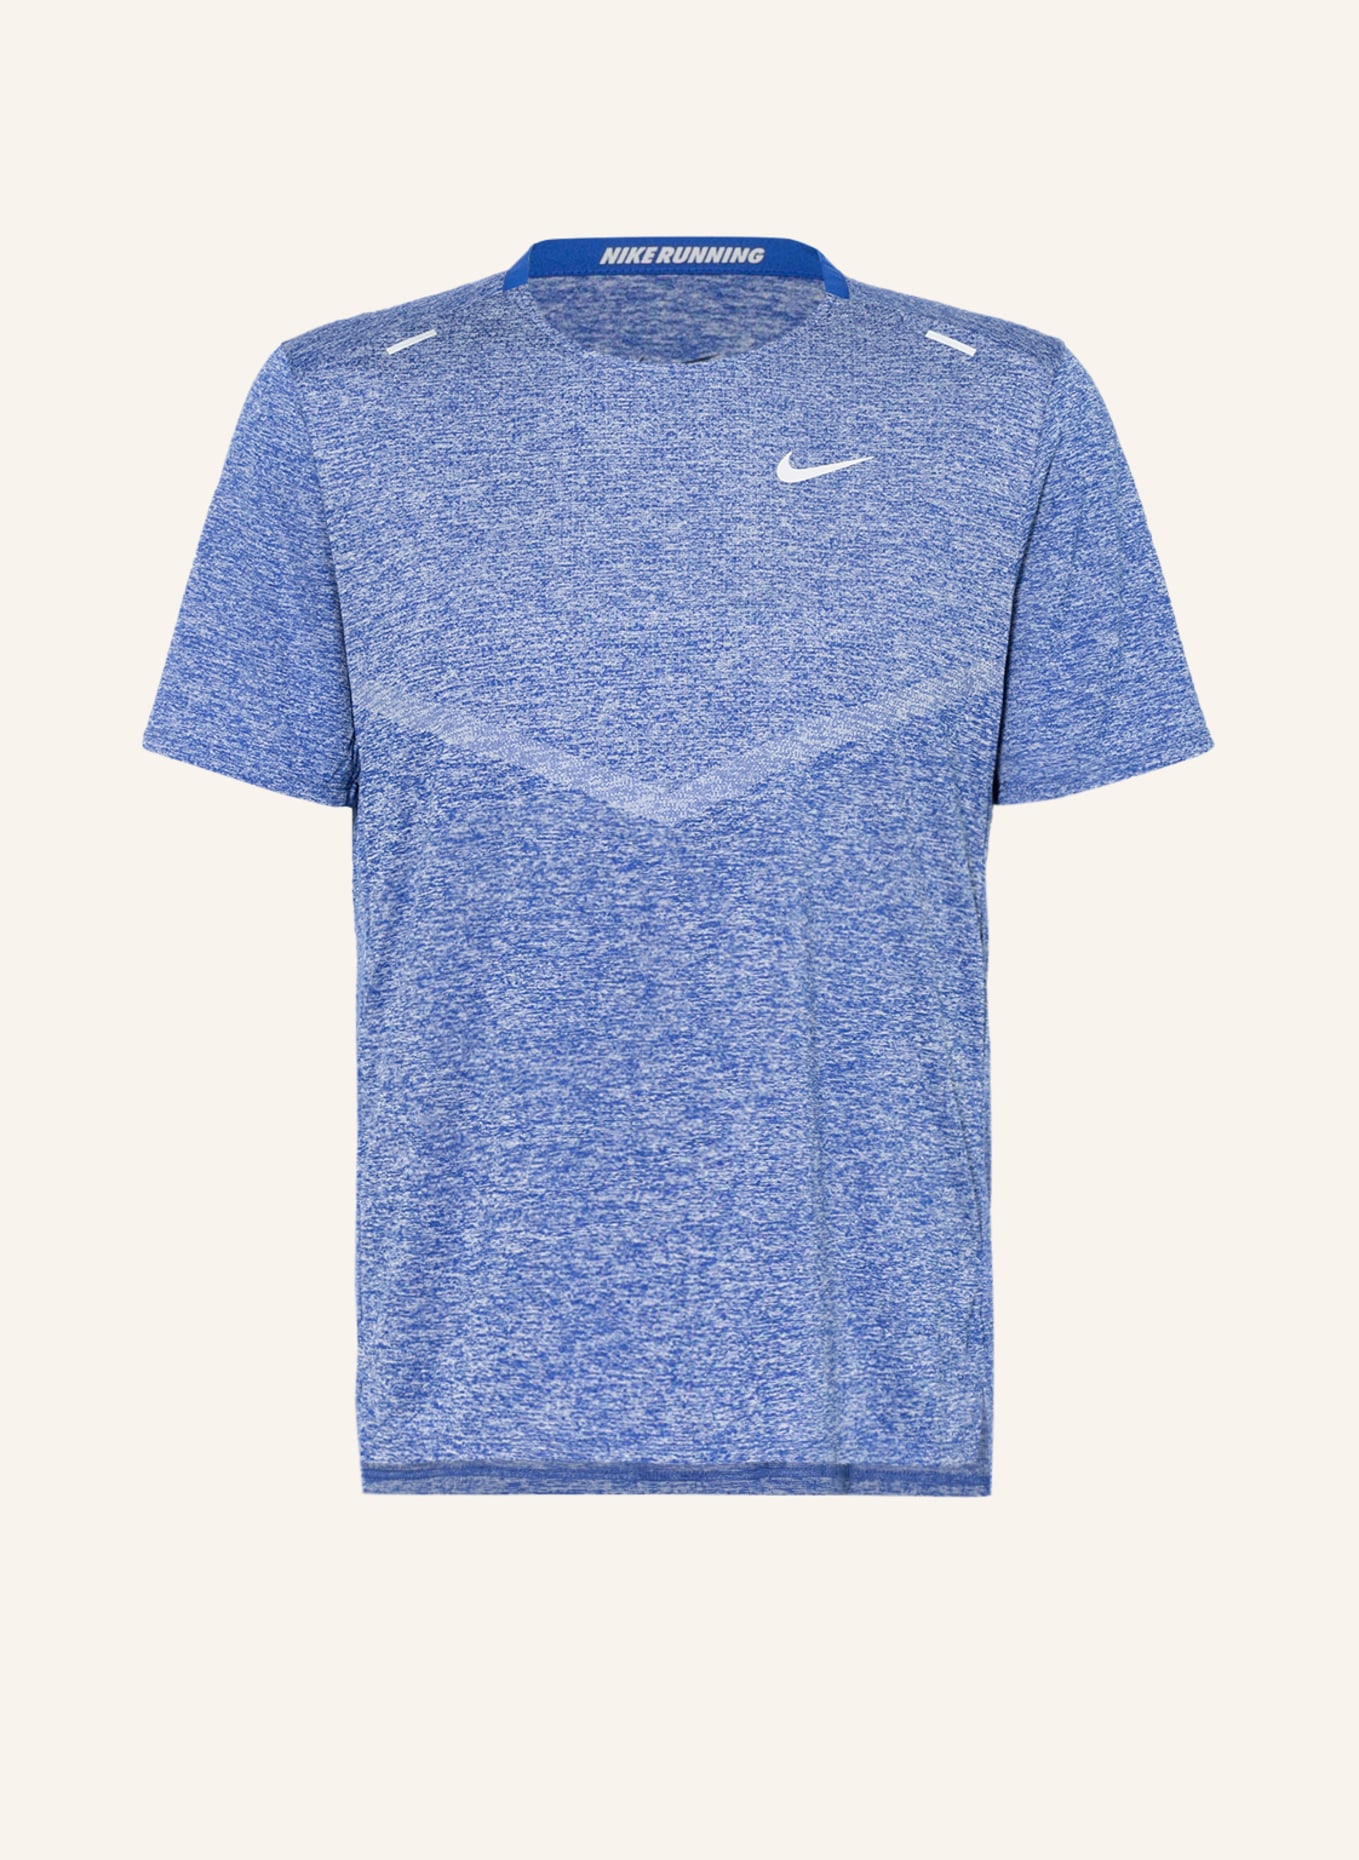 Nike Running shirt RISE 365, Color: BLUE/ LIGHT GRAY (Image 1)